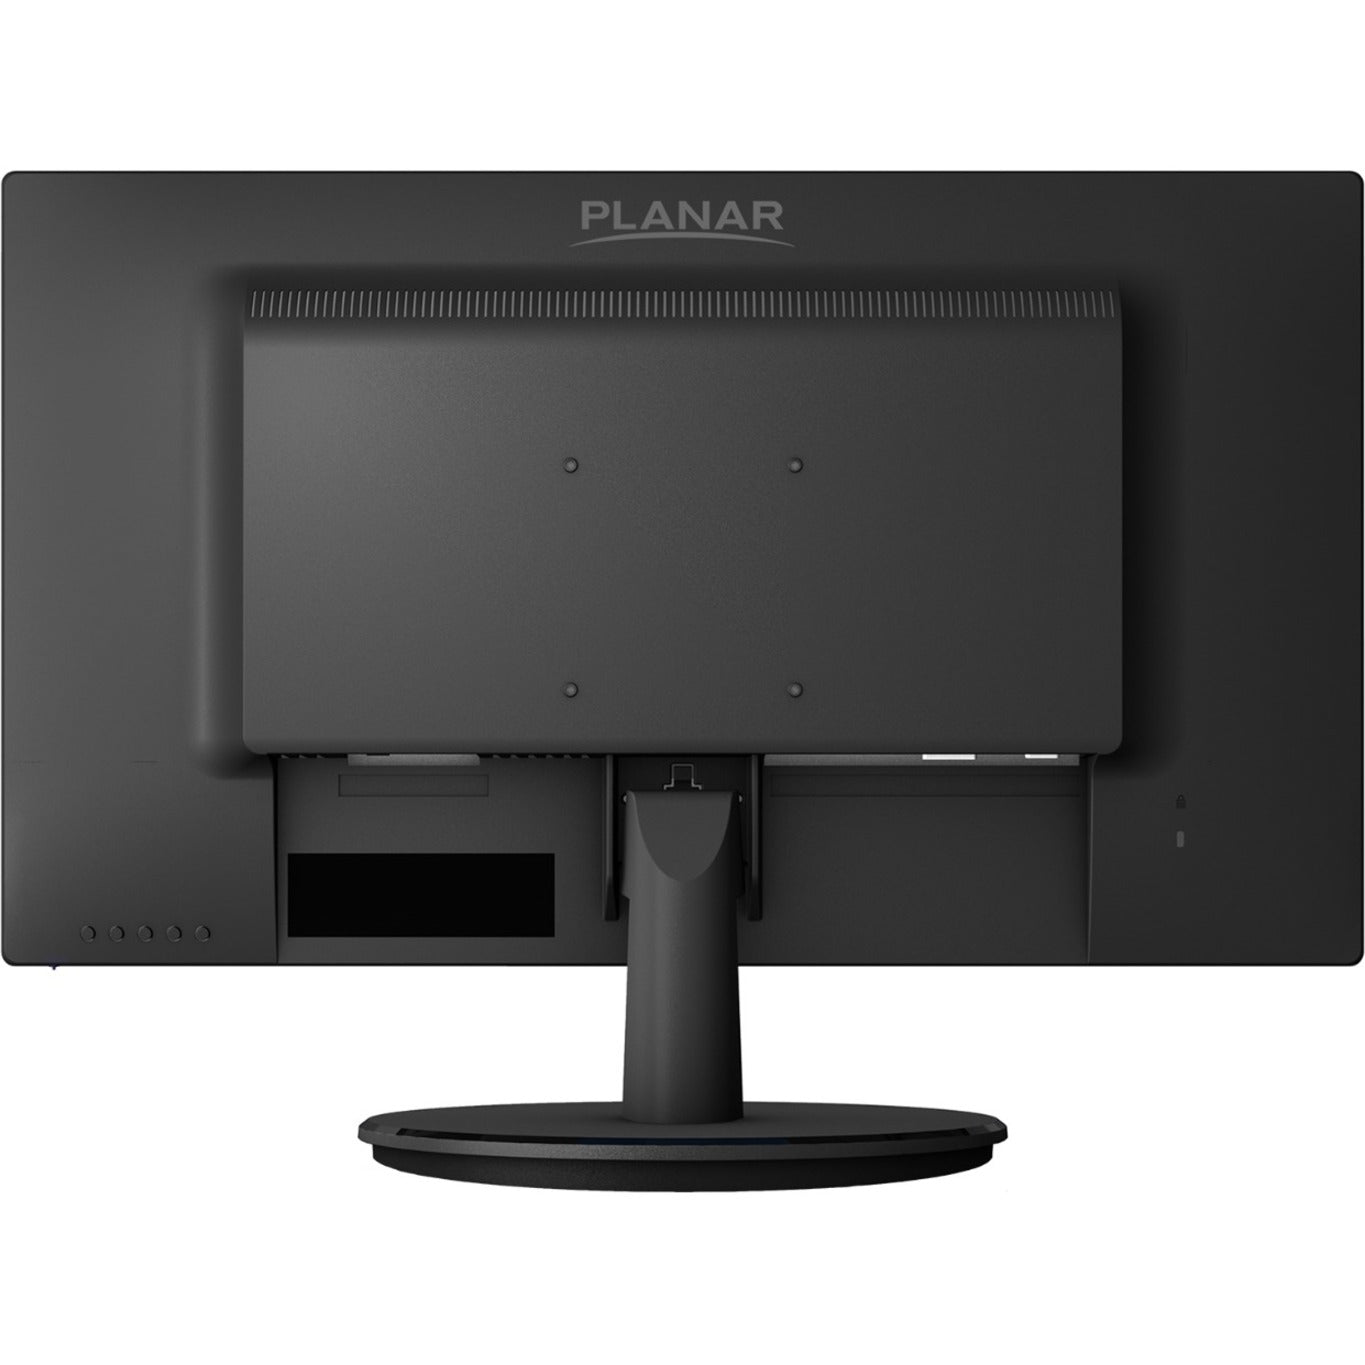 Planar 997-8371-00 PLN22770W 27" LCD Monitor, Full HD, 16:9, 250 Nit Brightness, 1,000:1 Contrast Ratio